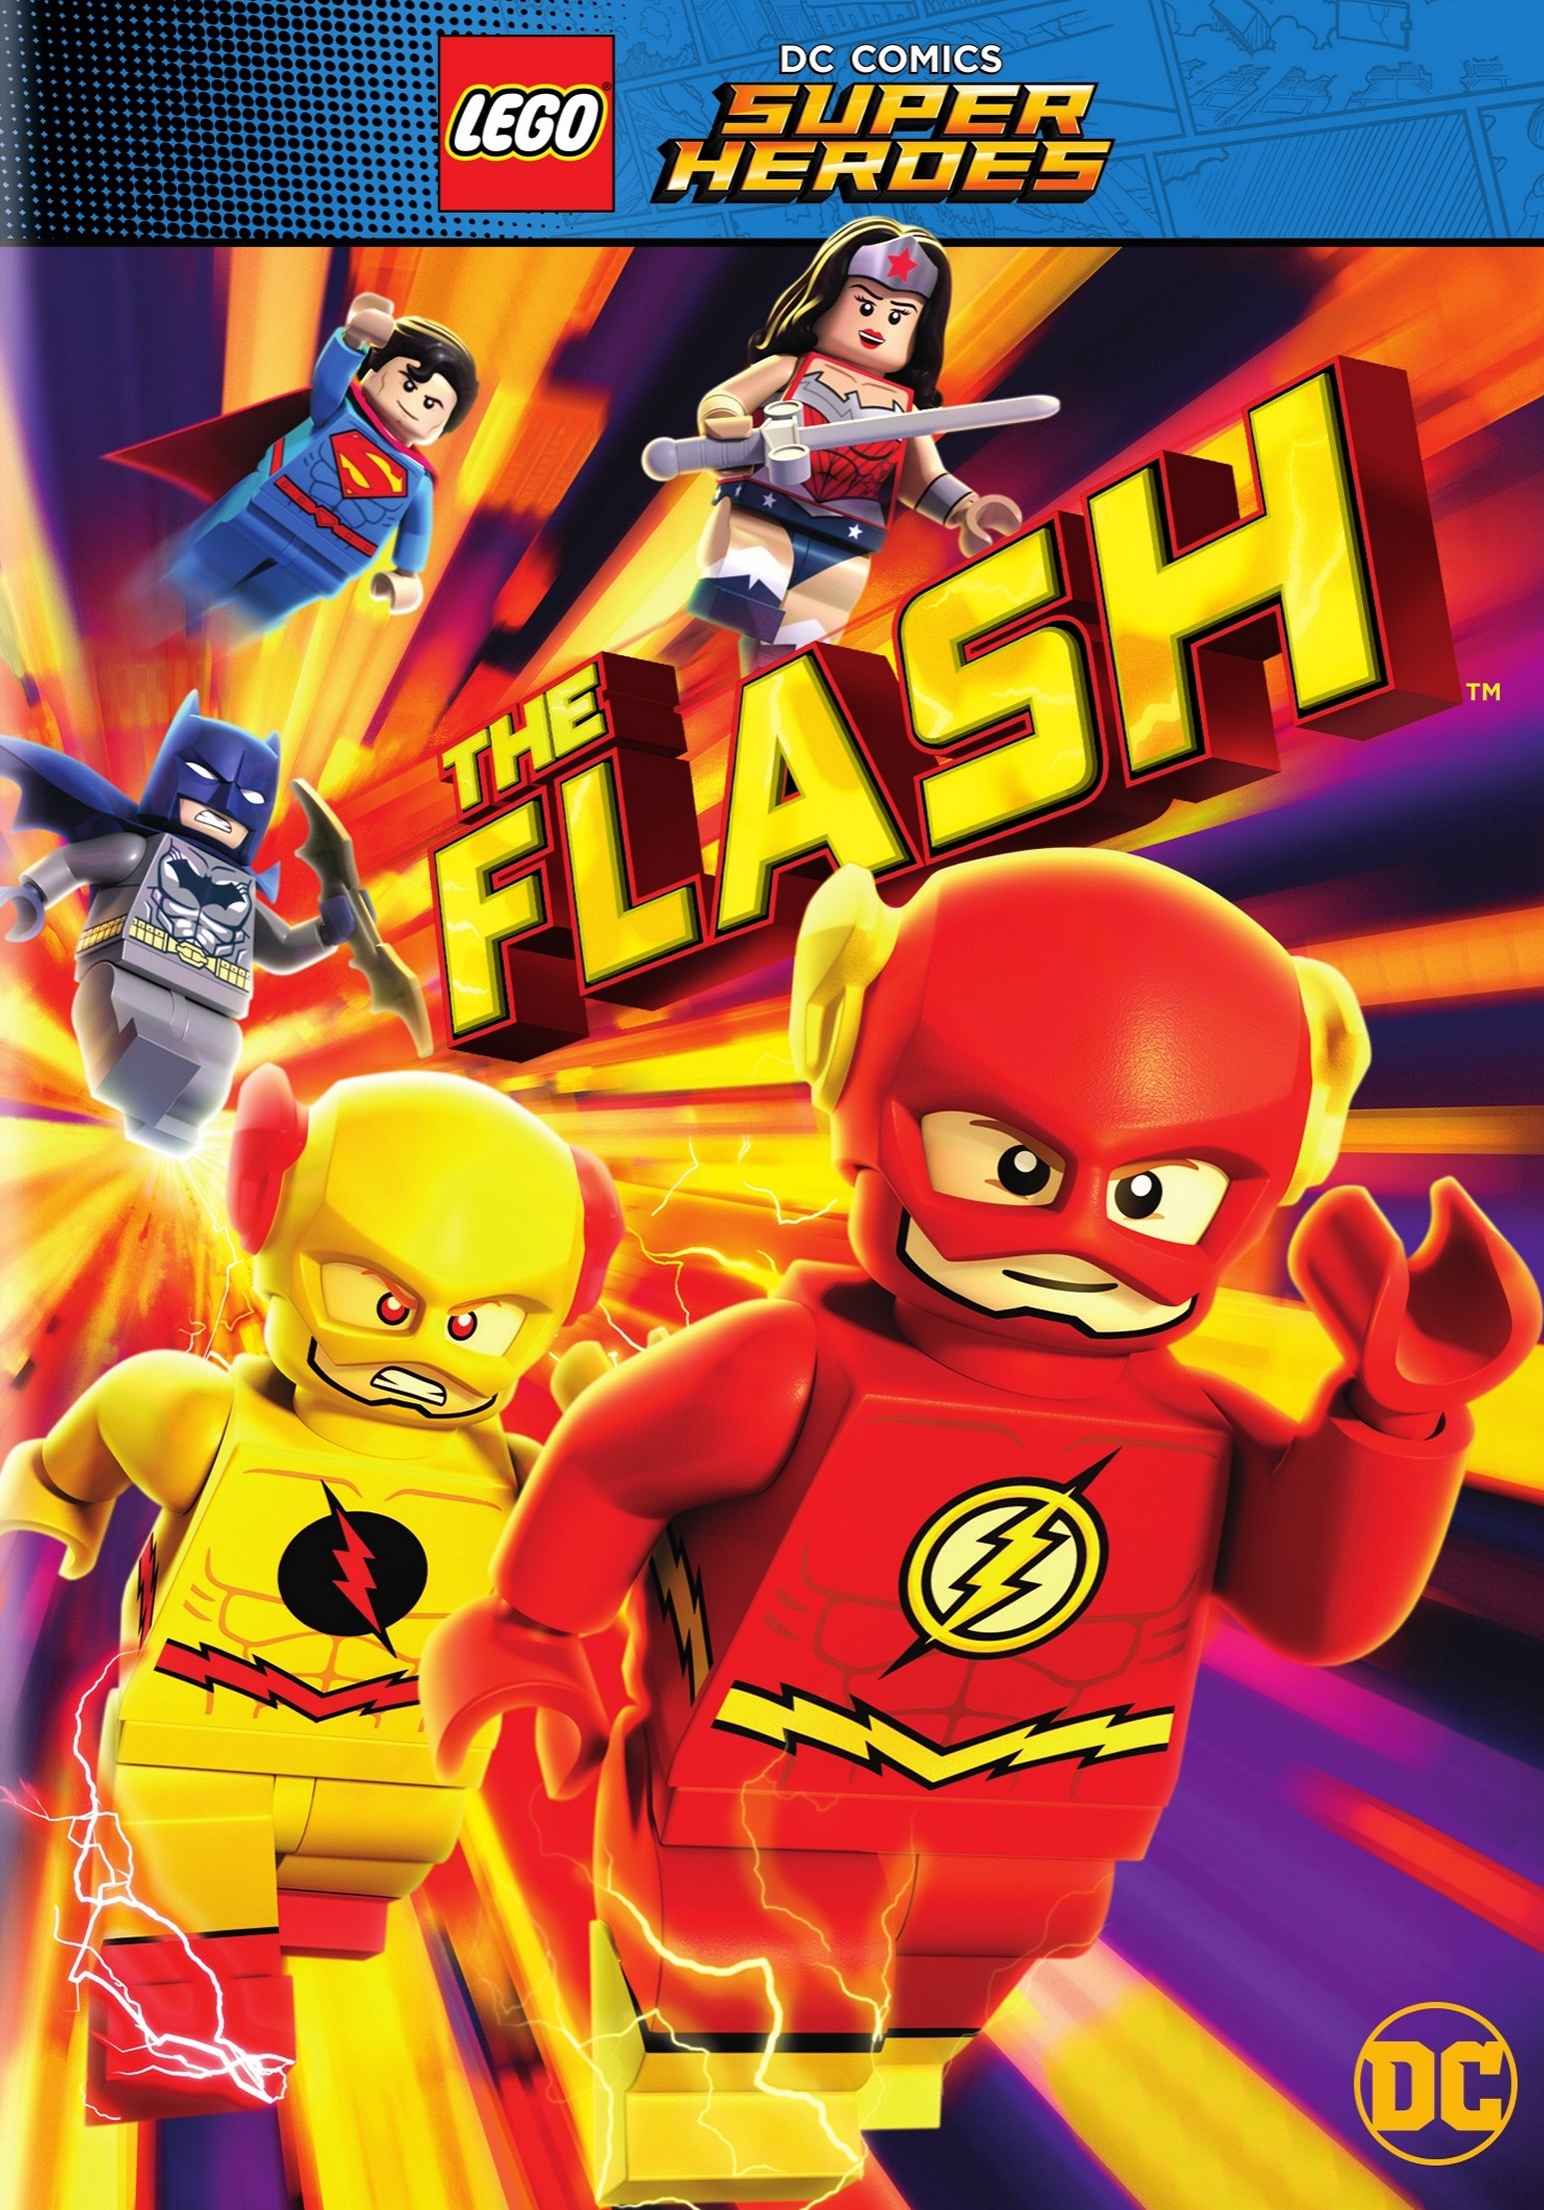 suspendere kapitalisme Umoderne LEGO DC Comics Super Heroes: The Flash [2018] - Best Buy